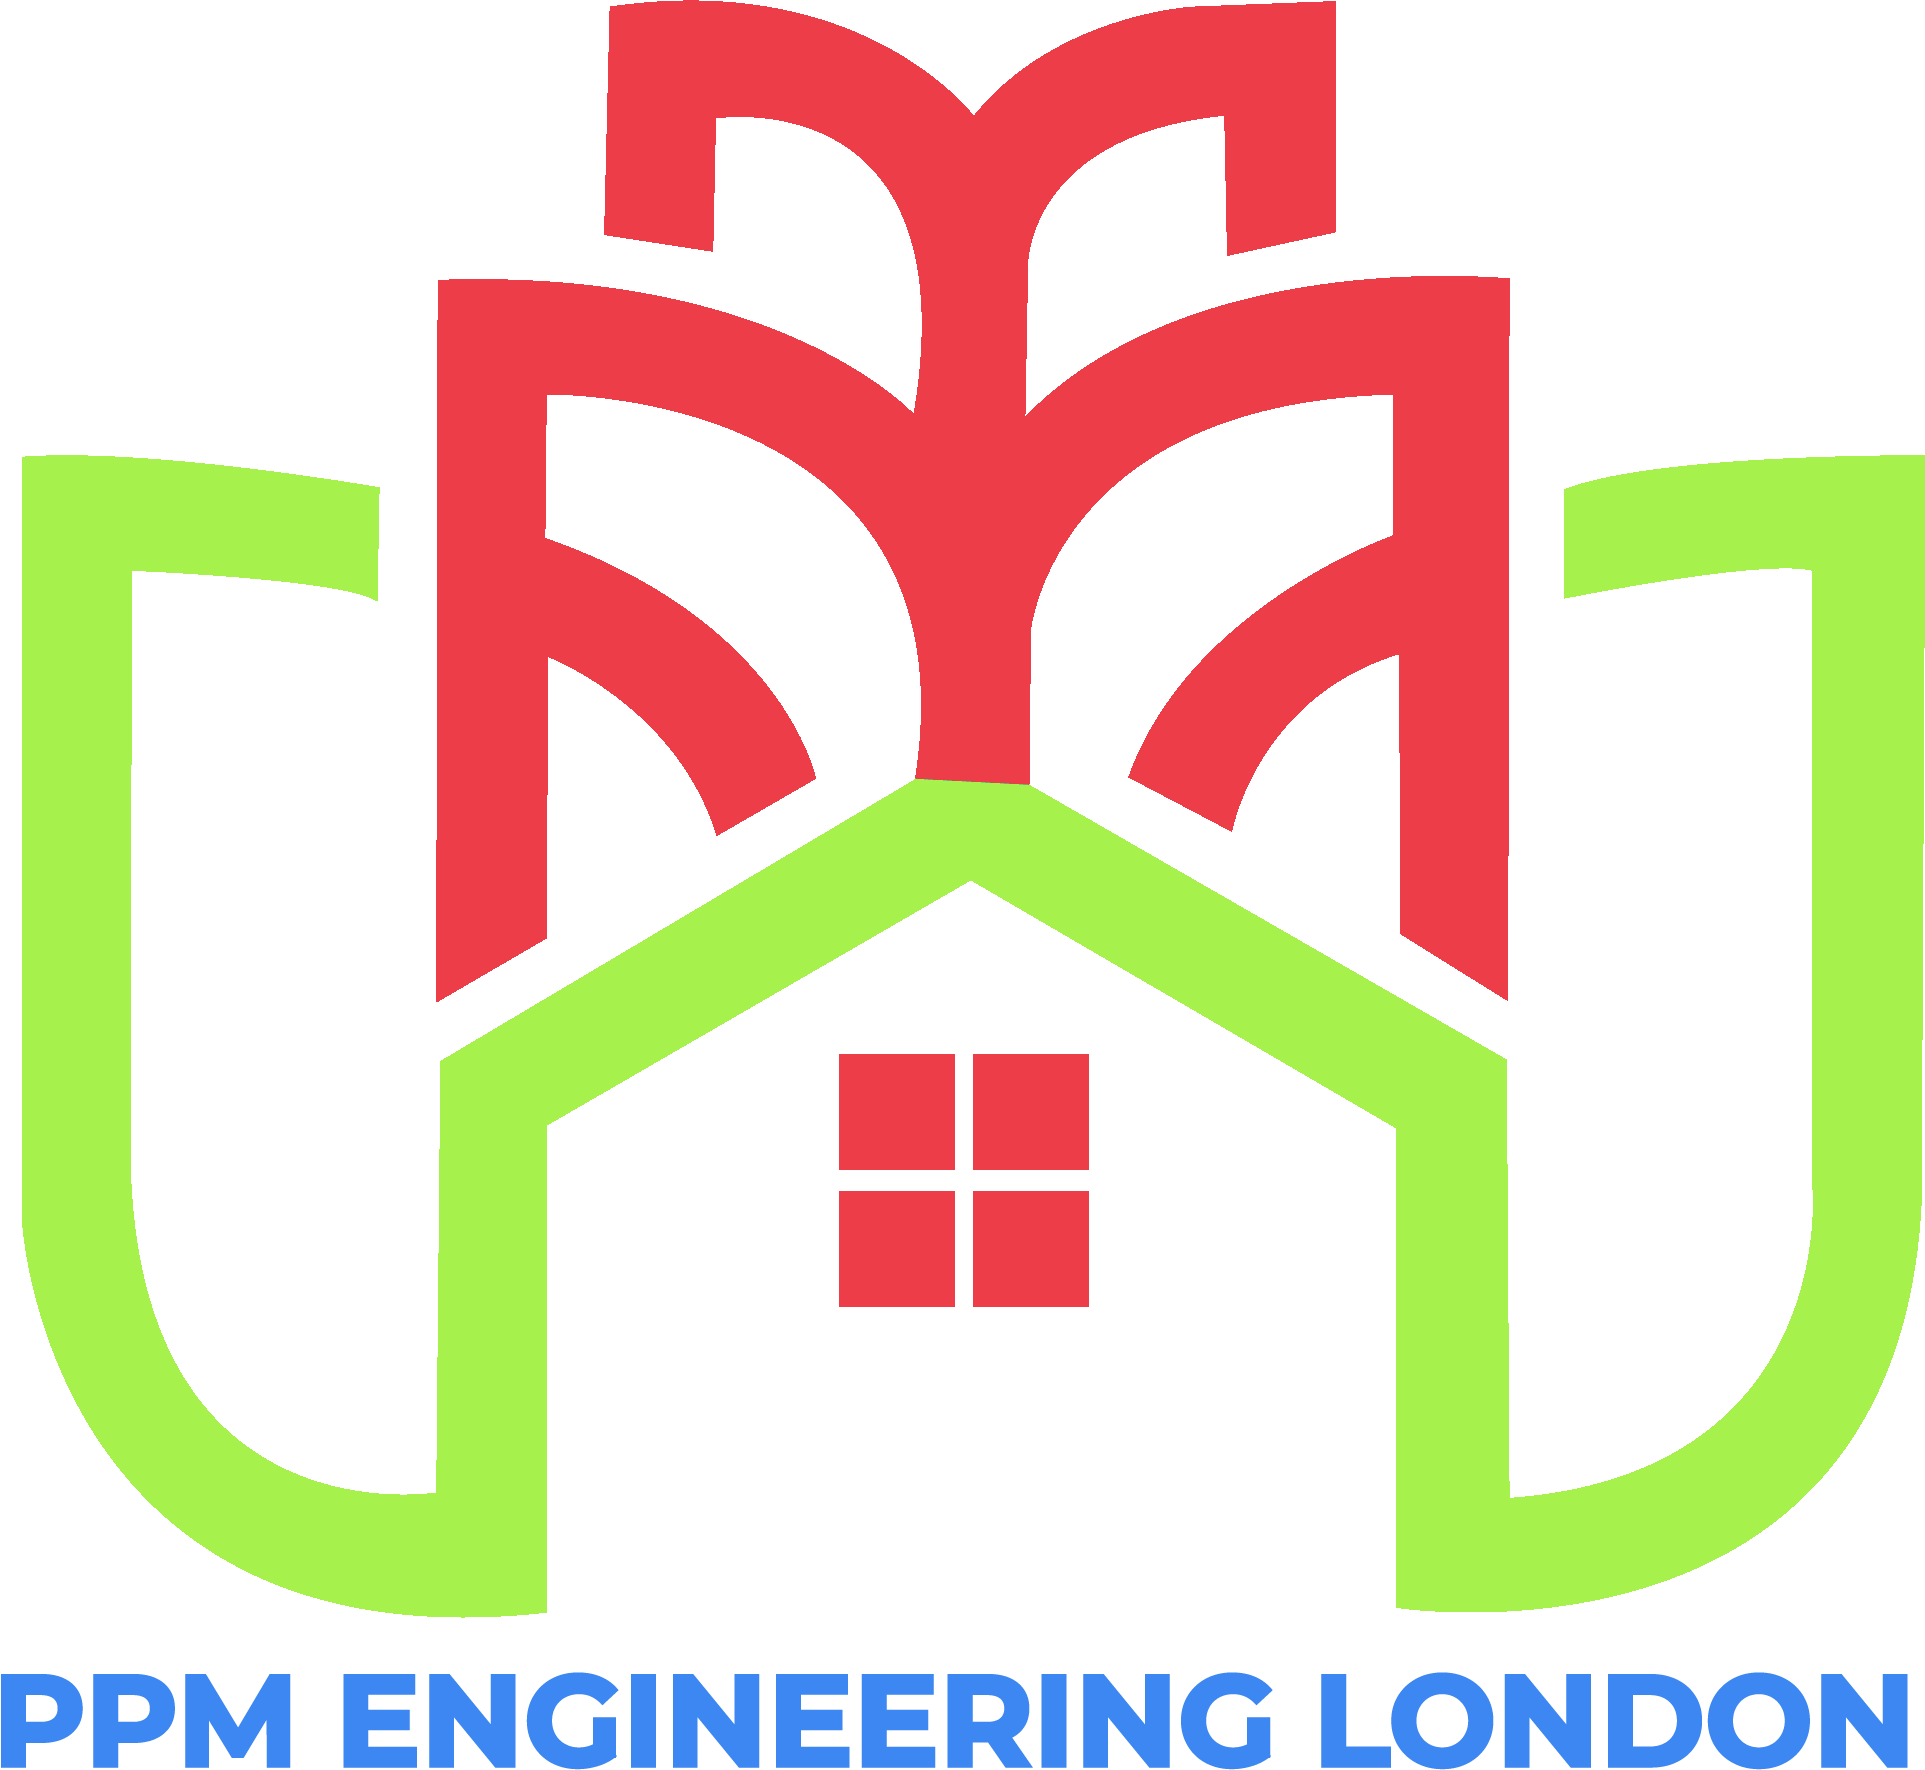 PPM Engineering London